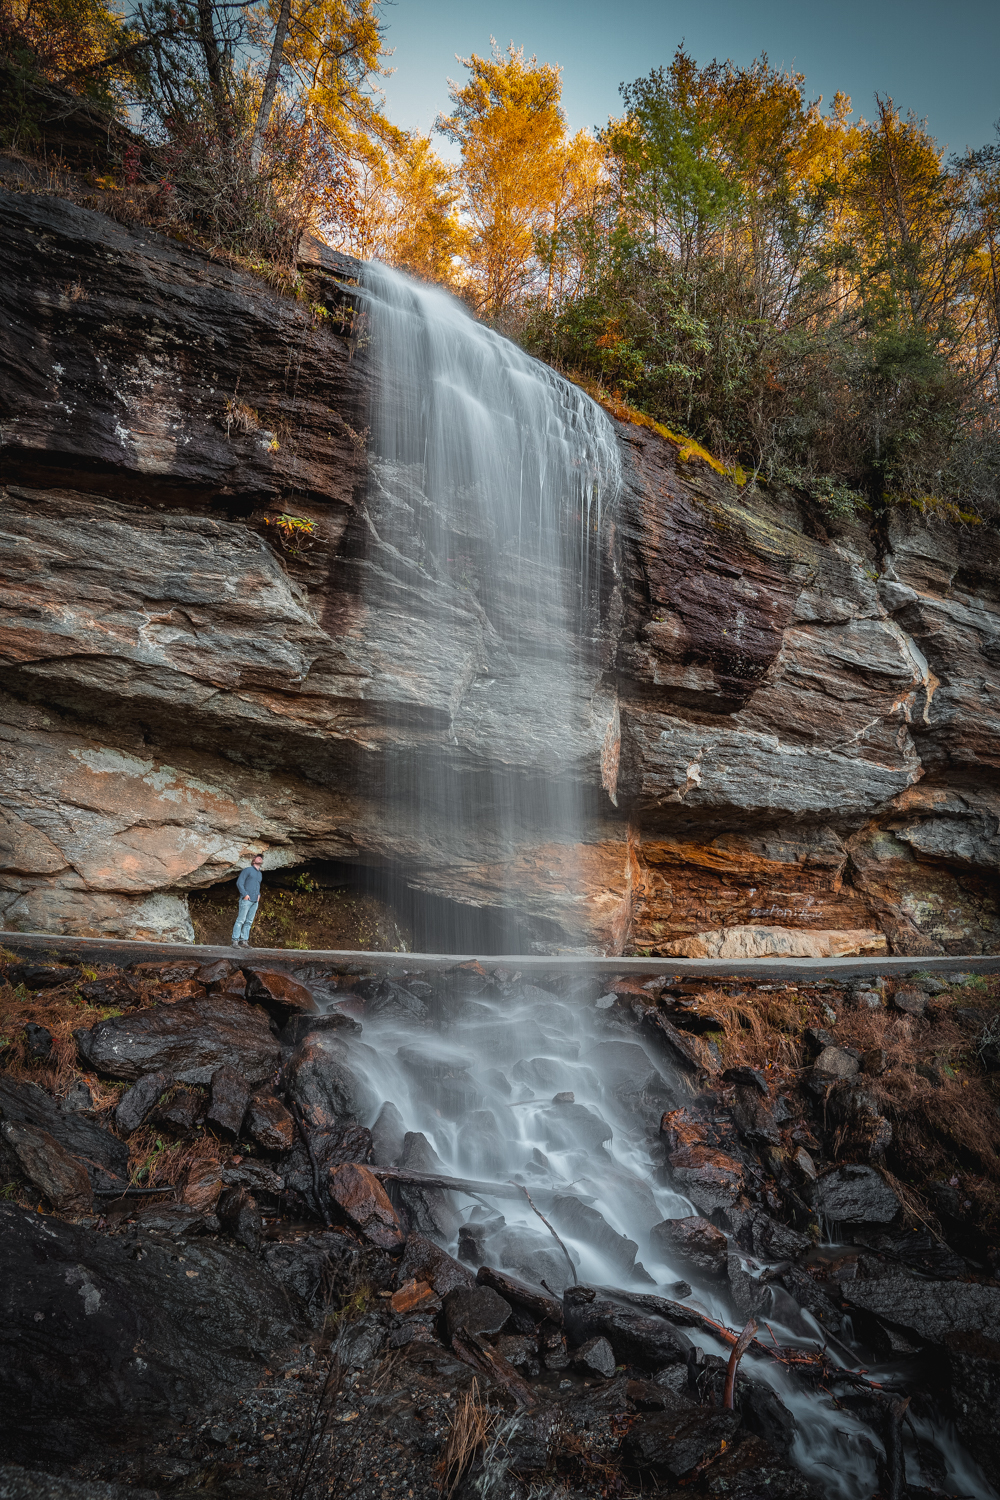 Where To See Fall Foliage In North Carolina - Bridal Veil Falls in Highlands NC